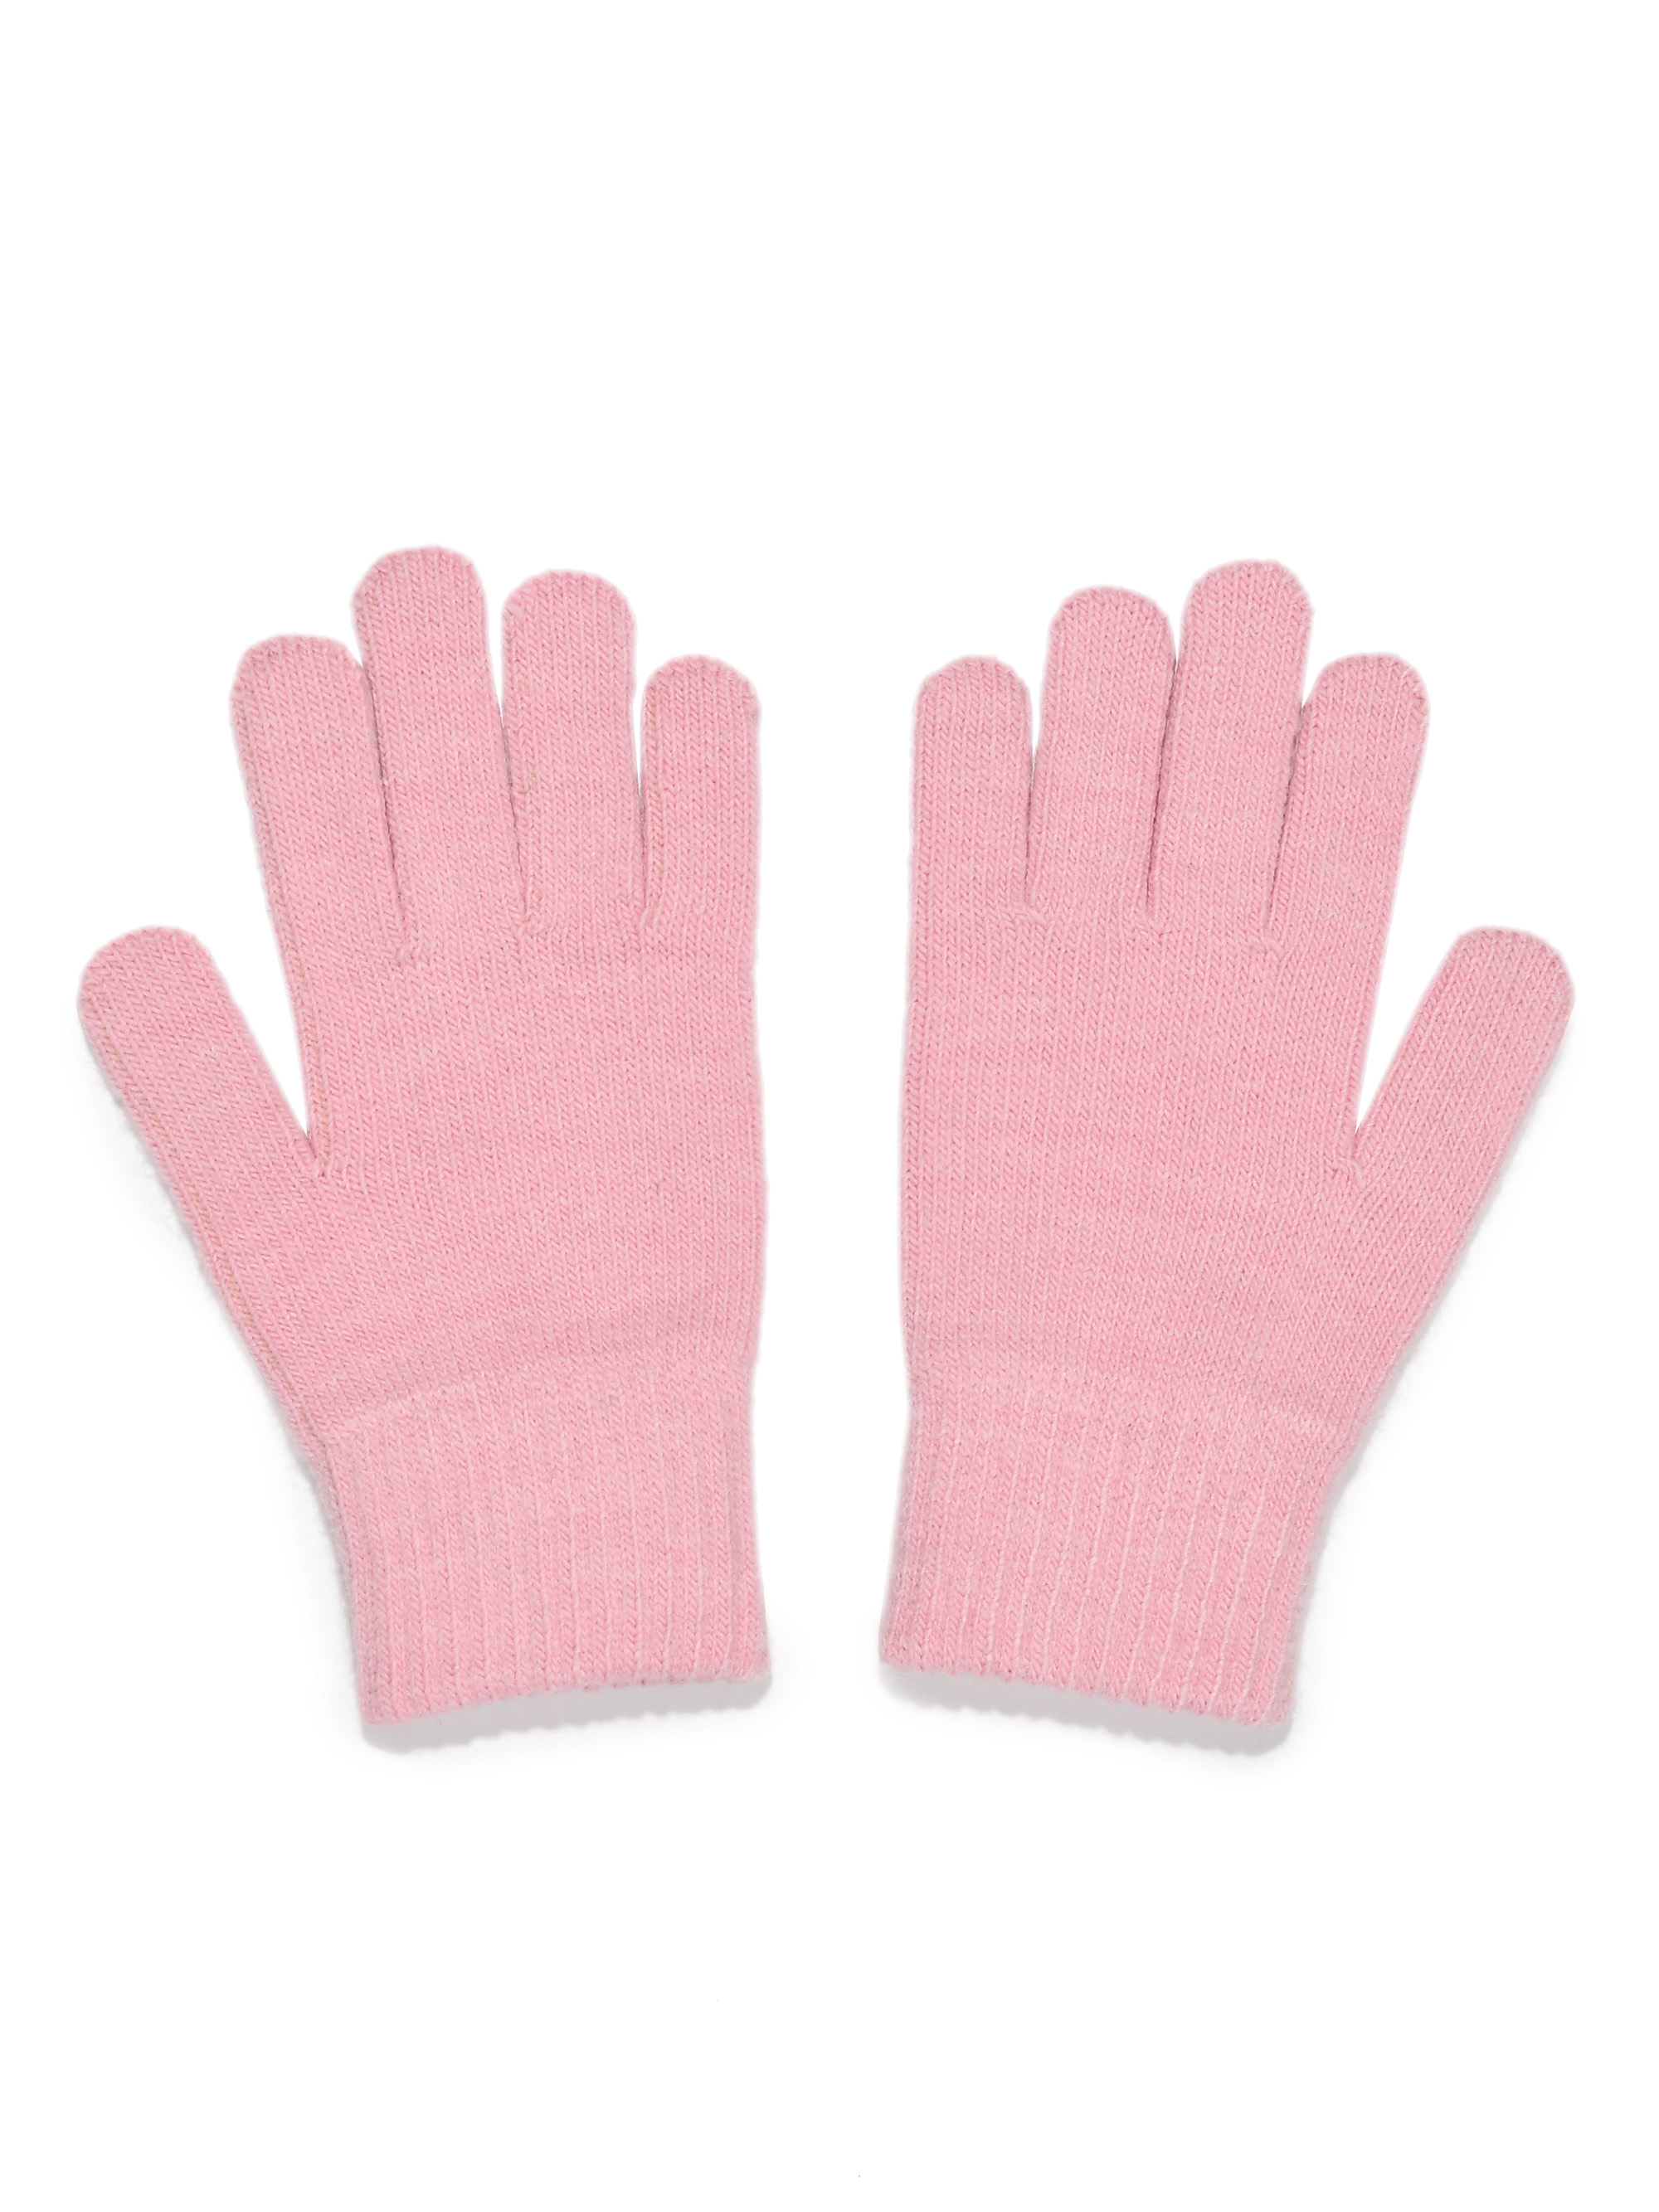 Перчатки женские Maxval PeW200662 розовые, р. L-M